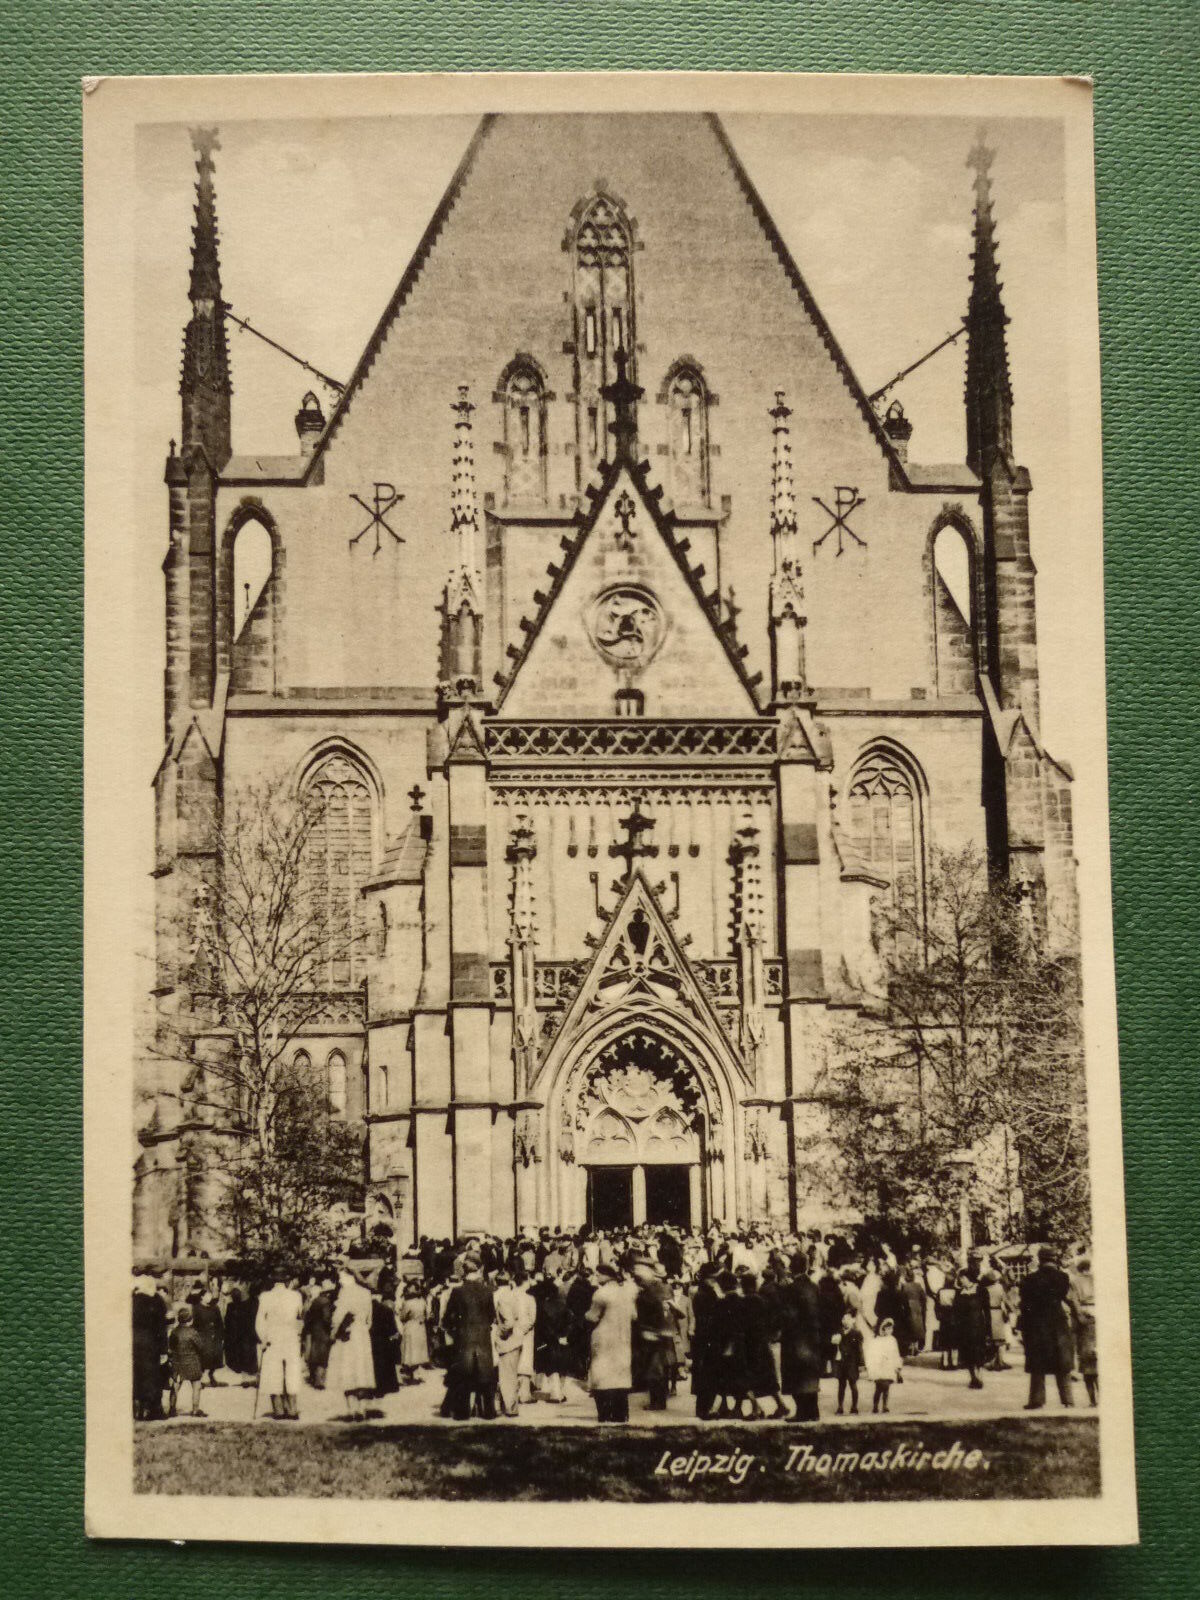 Ak Leipzig,St.Thomas Church,Menschen, Animated Scene, Postal Not Used